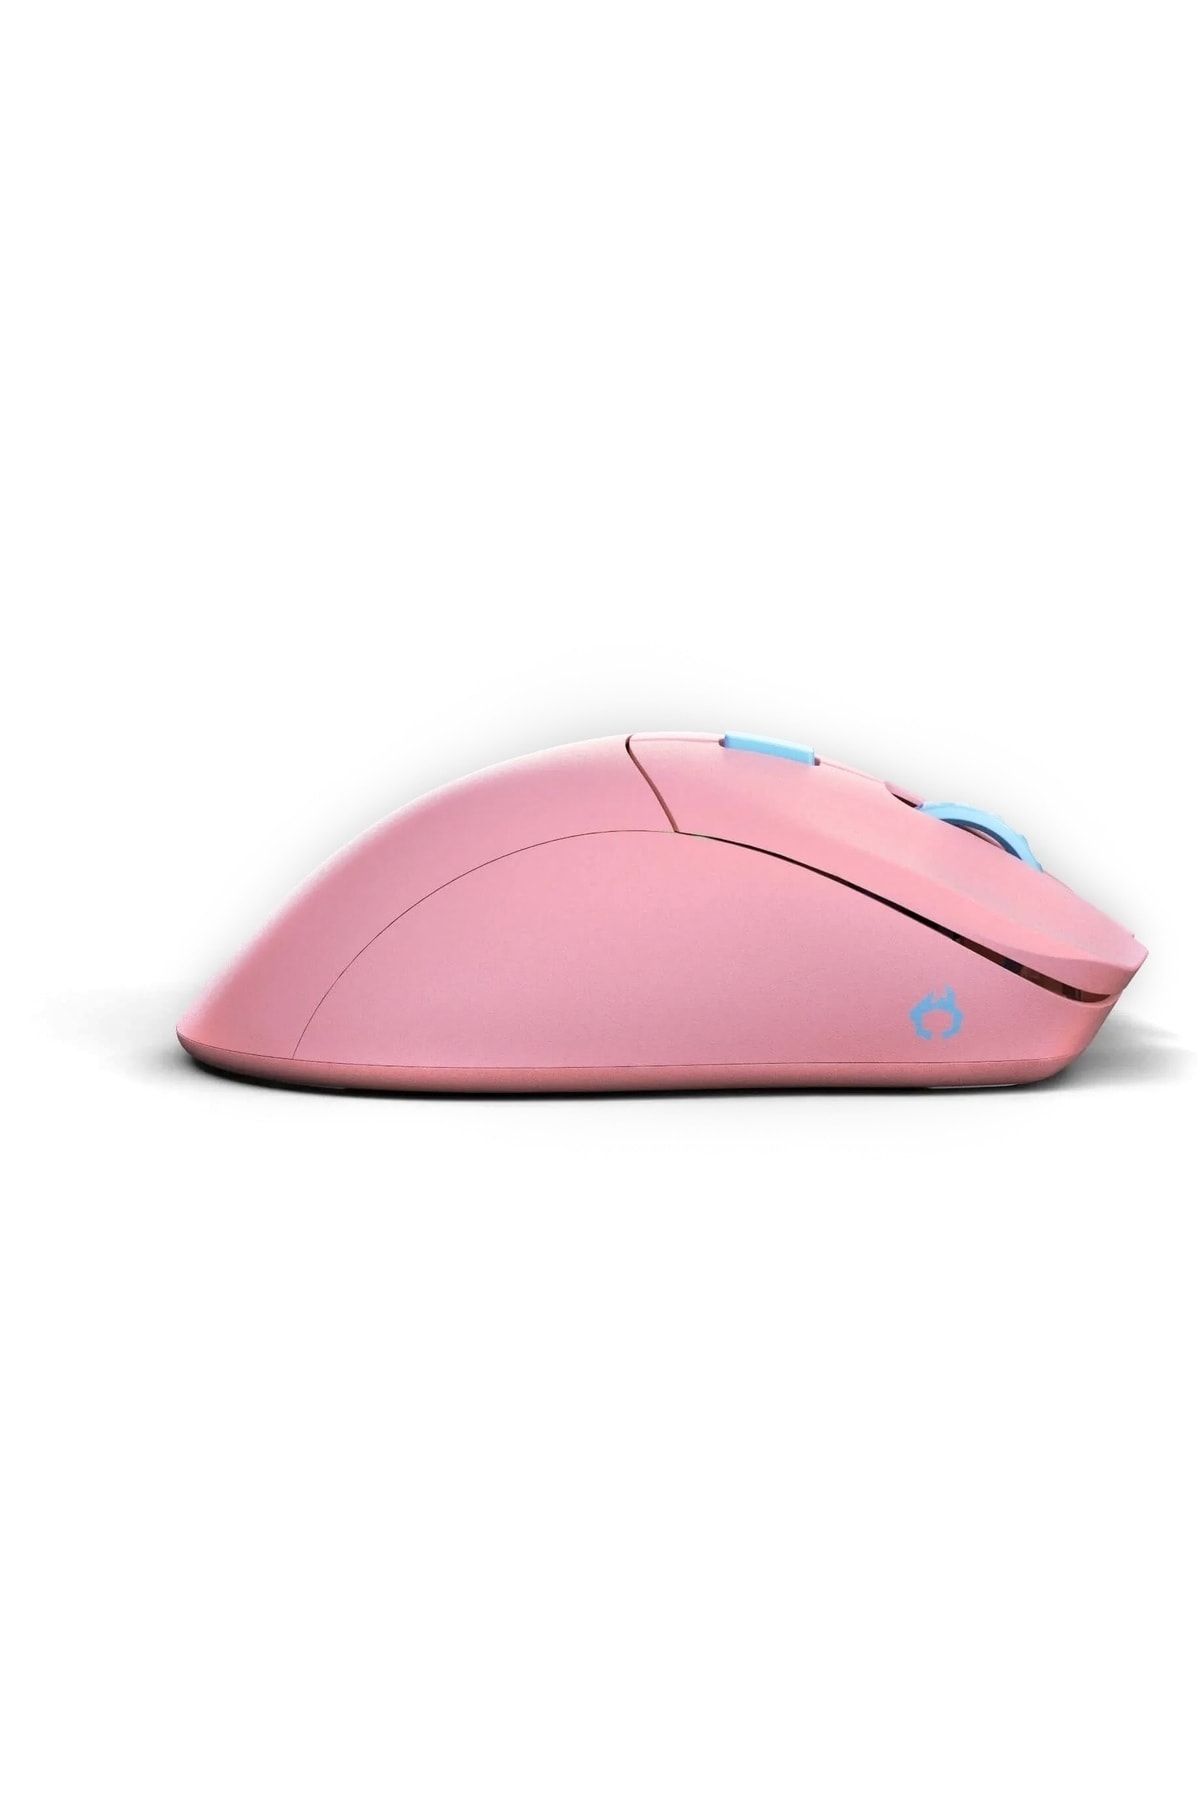 Glorious Model D Pro Flamingo Kablosuz Pembe Gaming Mouse